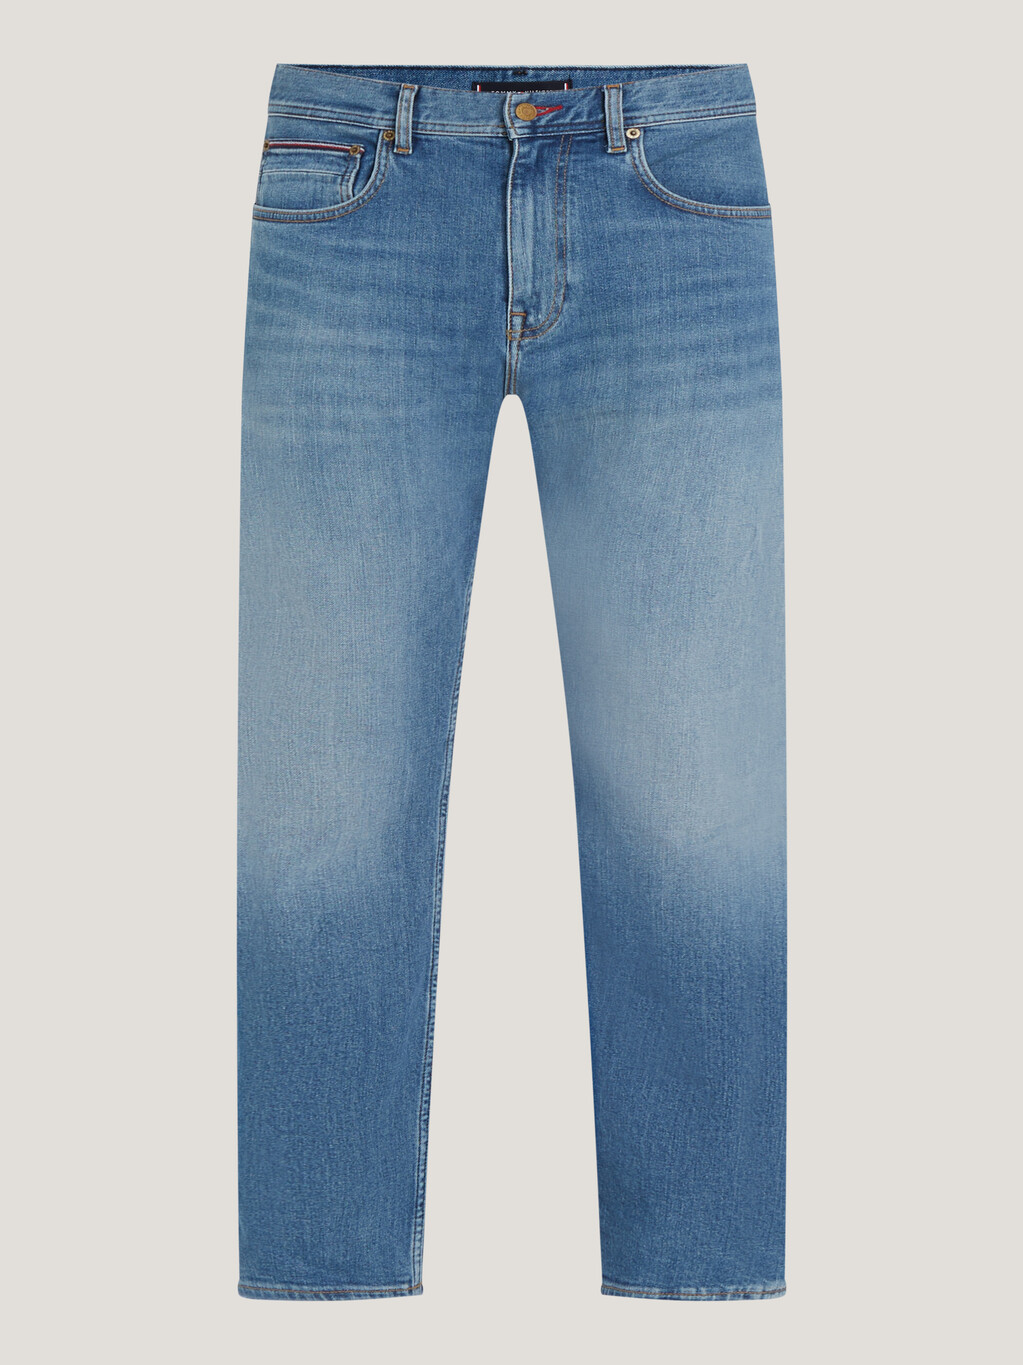 TH Flex Mercer Regular Straight Jeans, Boston Indigo, hi-res